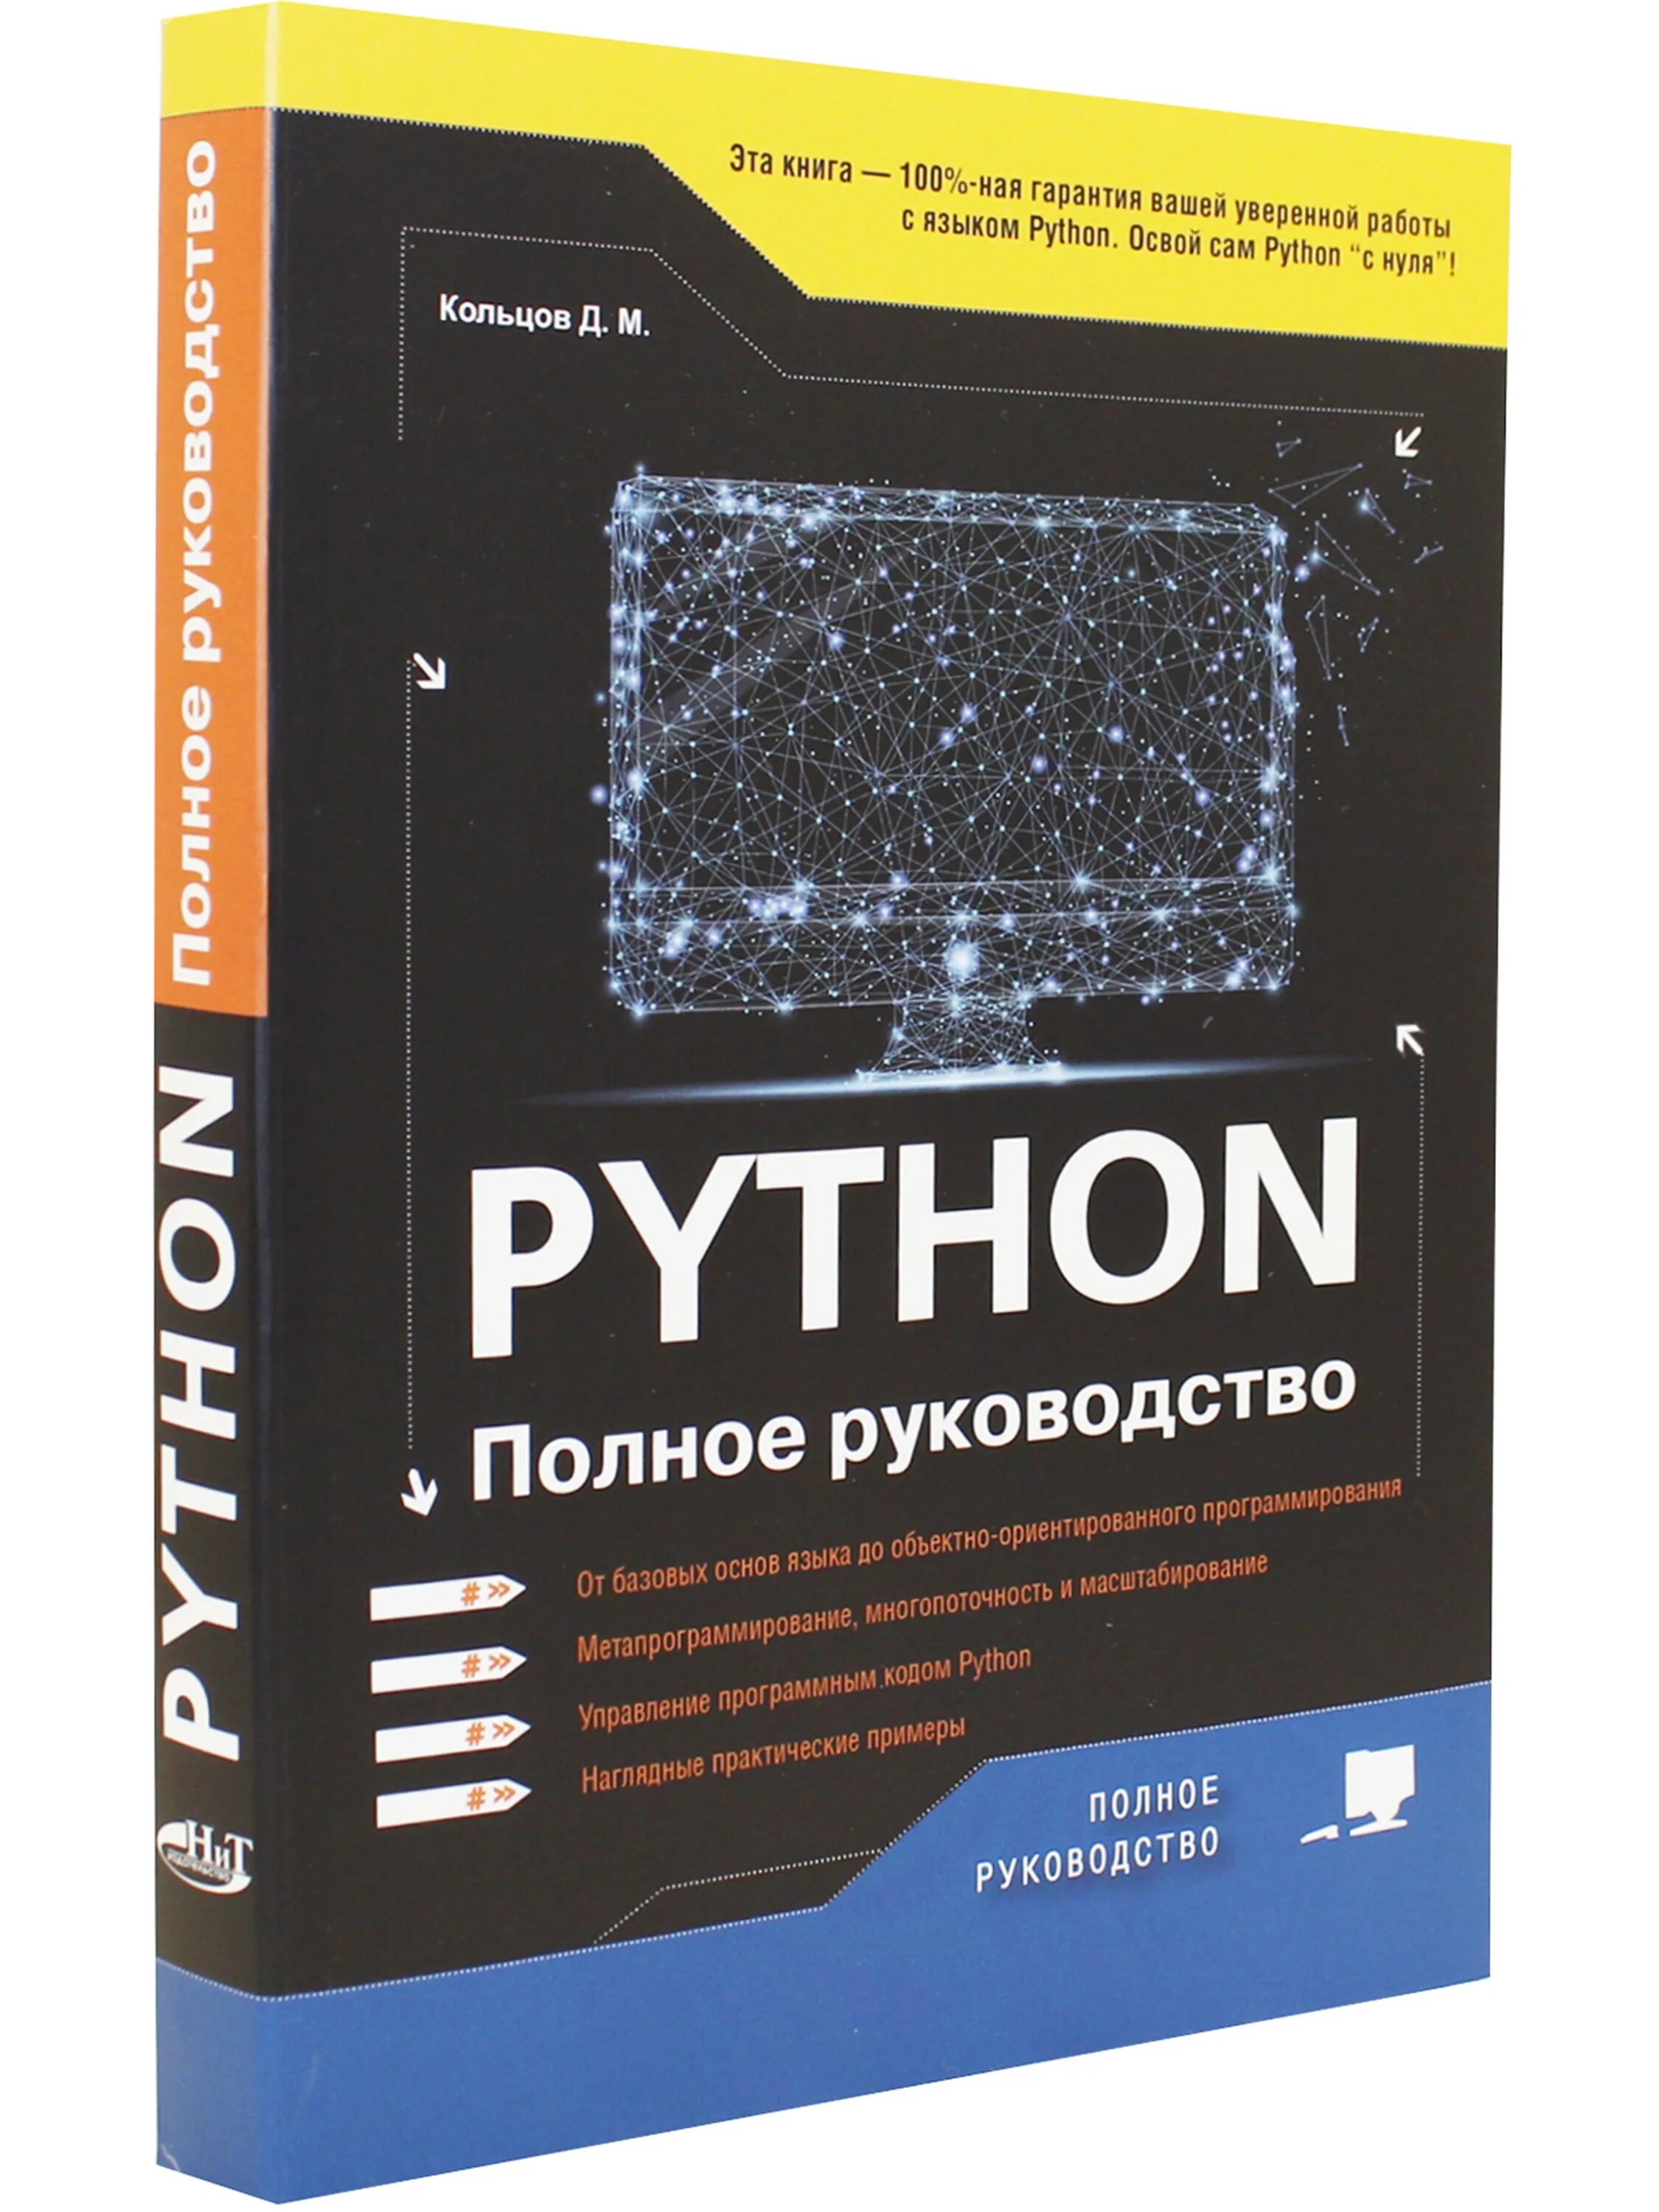 Задачи python книга. Книги по Python. Книга питон. Python полное руководство. Книги по программированию на питоне.